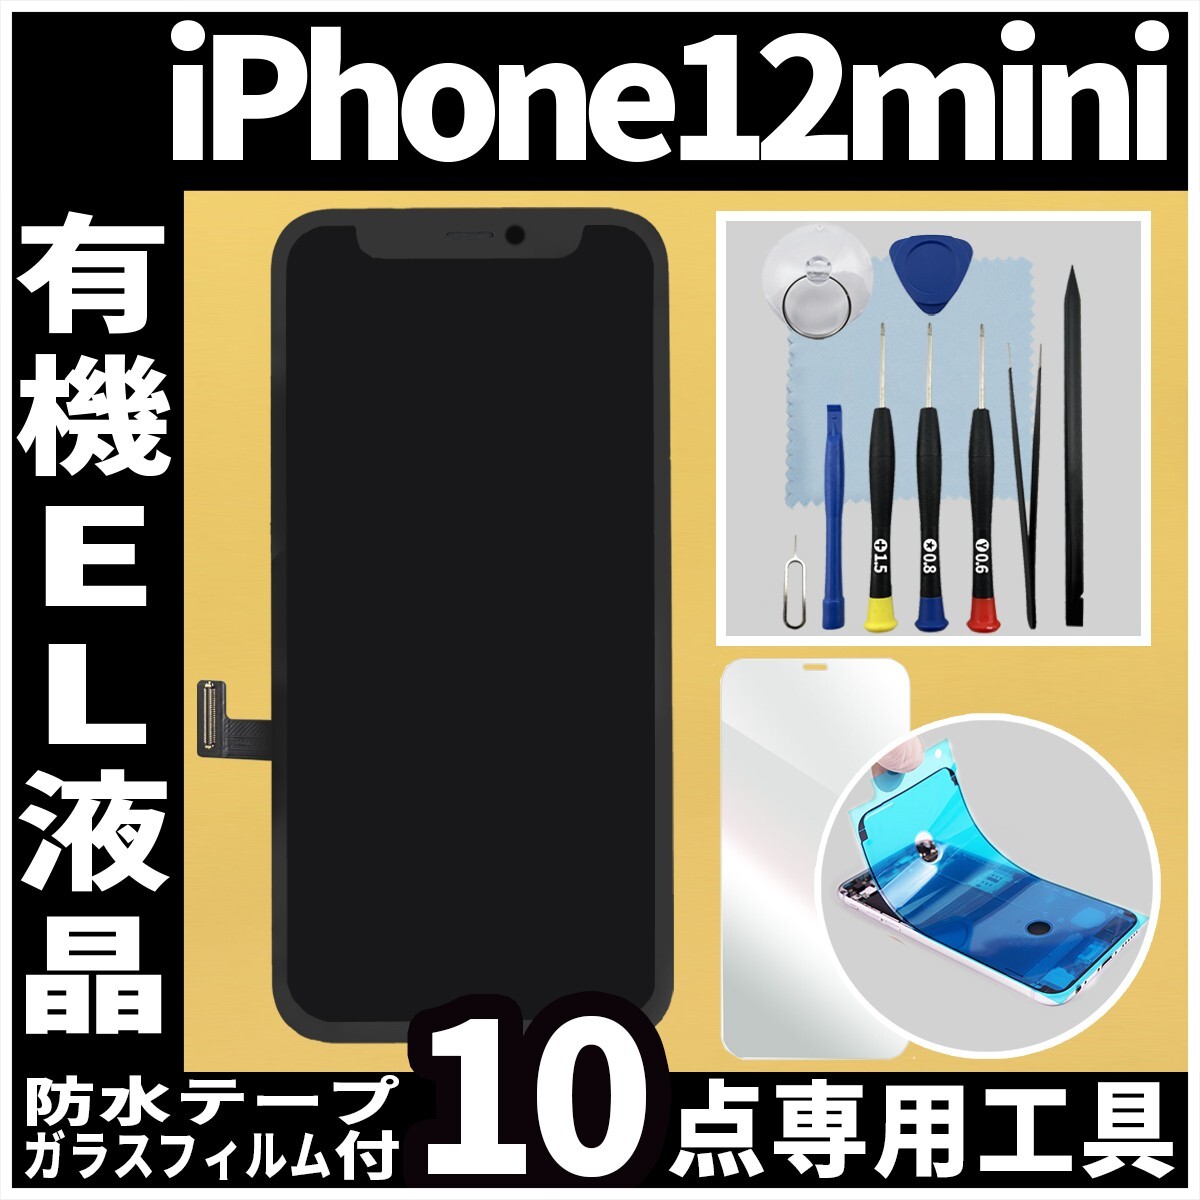 iPhone12mini フロントパネル 有機EL液晶 OLED 防水テープ 修理工具付 互換 ガラス割れ 液晶修理 iphone 画面割れ ディスプレイ 純正同等_画像1